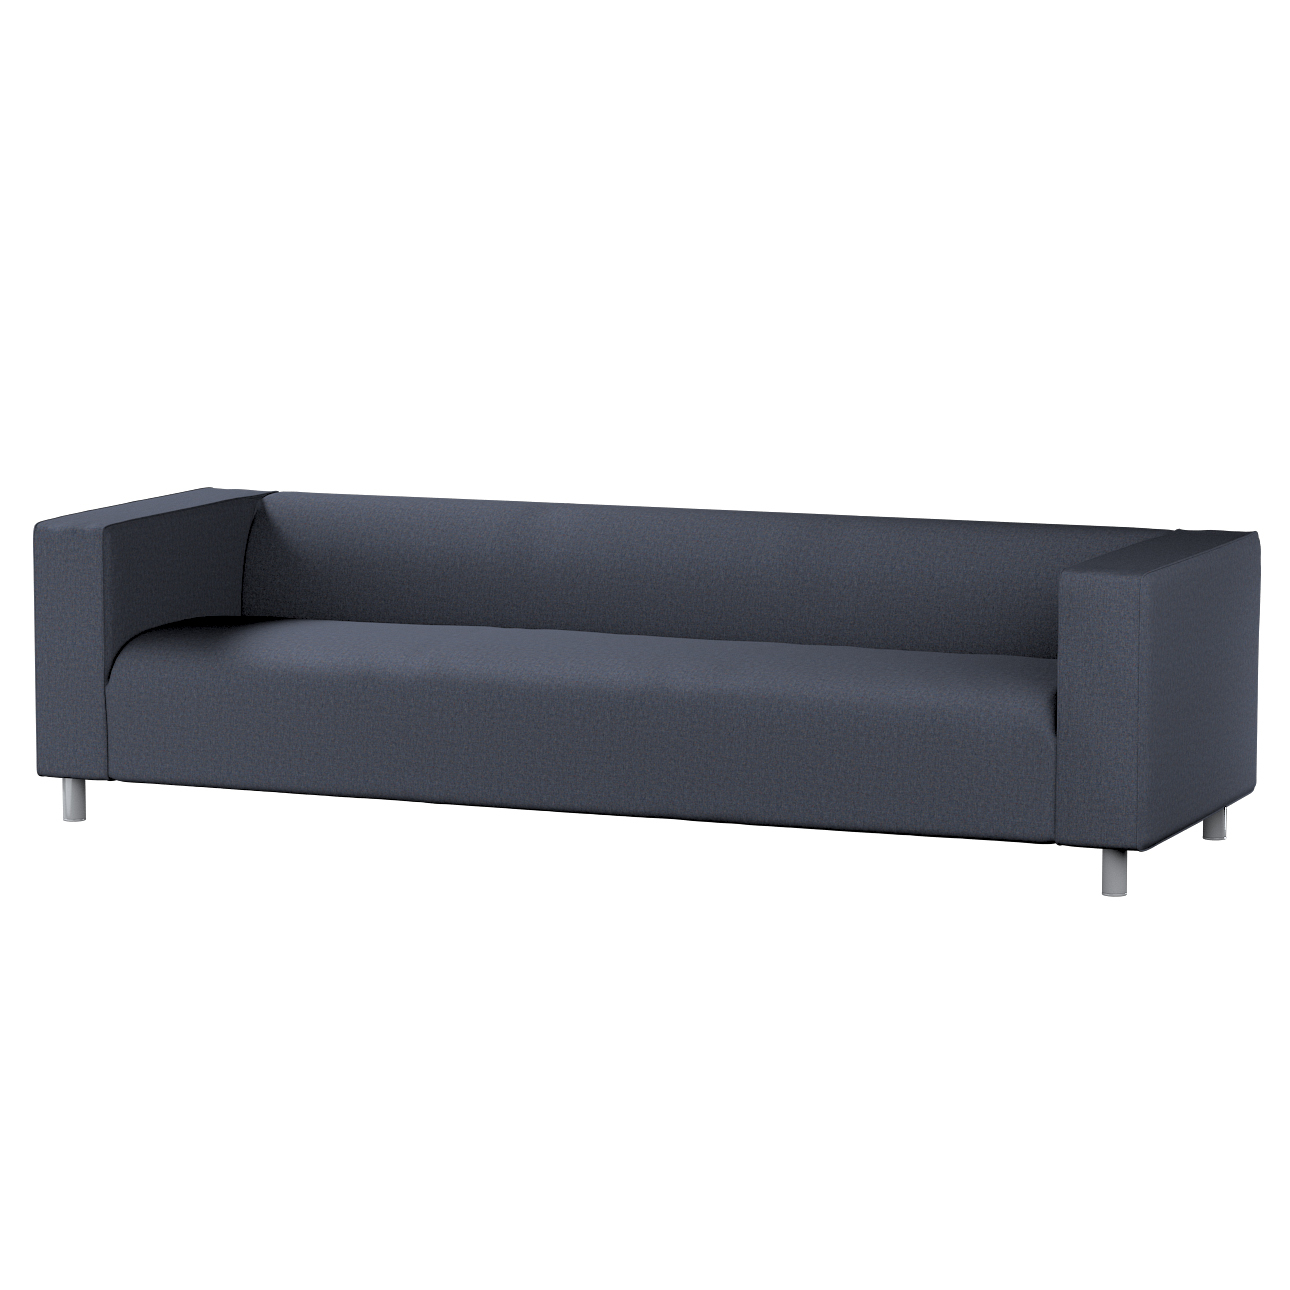 Bezug für Klippan 4-Sitzer Sofa, dunkelblau, Bezug für Klippan 4-Sitzer, Ma günstig online kaufen